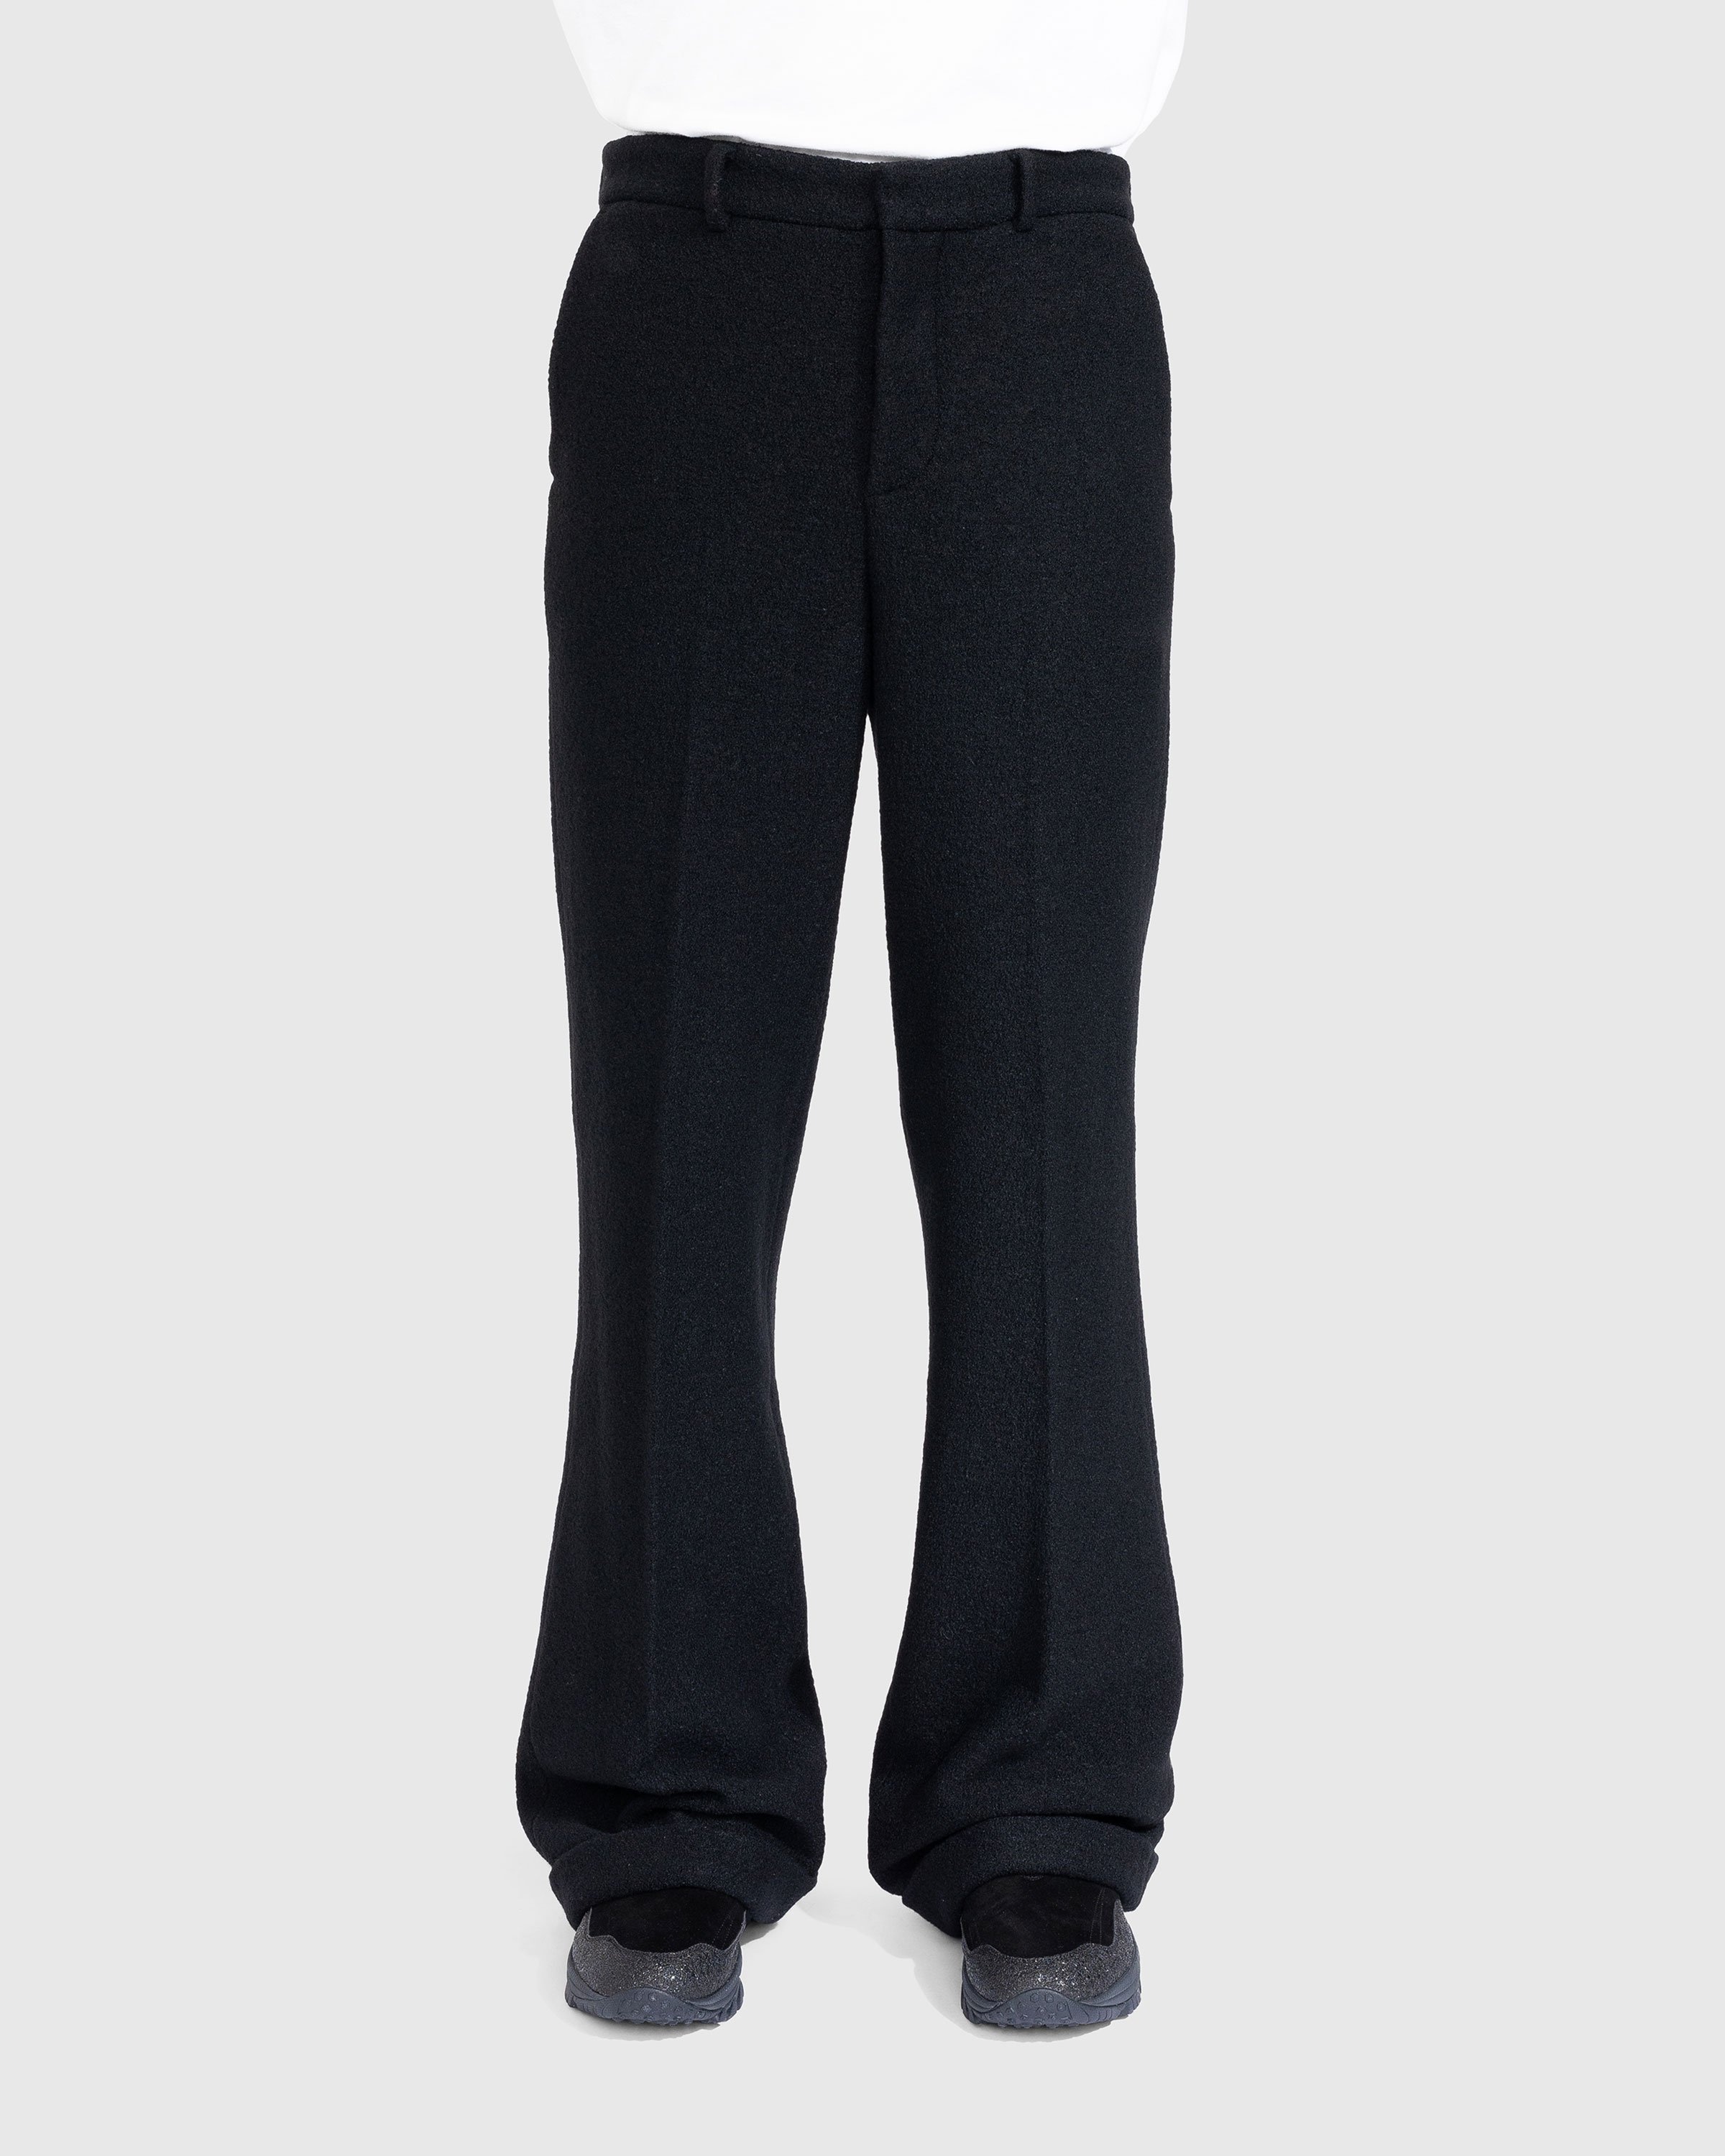 Trussardi – Boucle Jersey Trousers Black - Pants - Black - Image 2